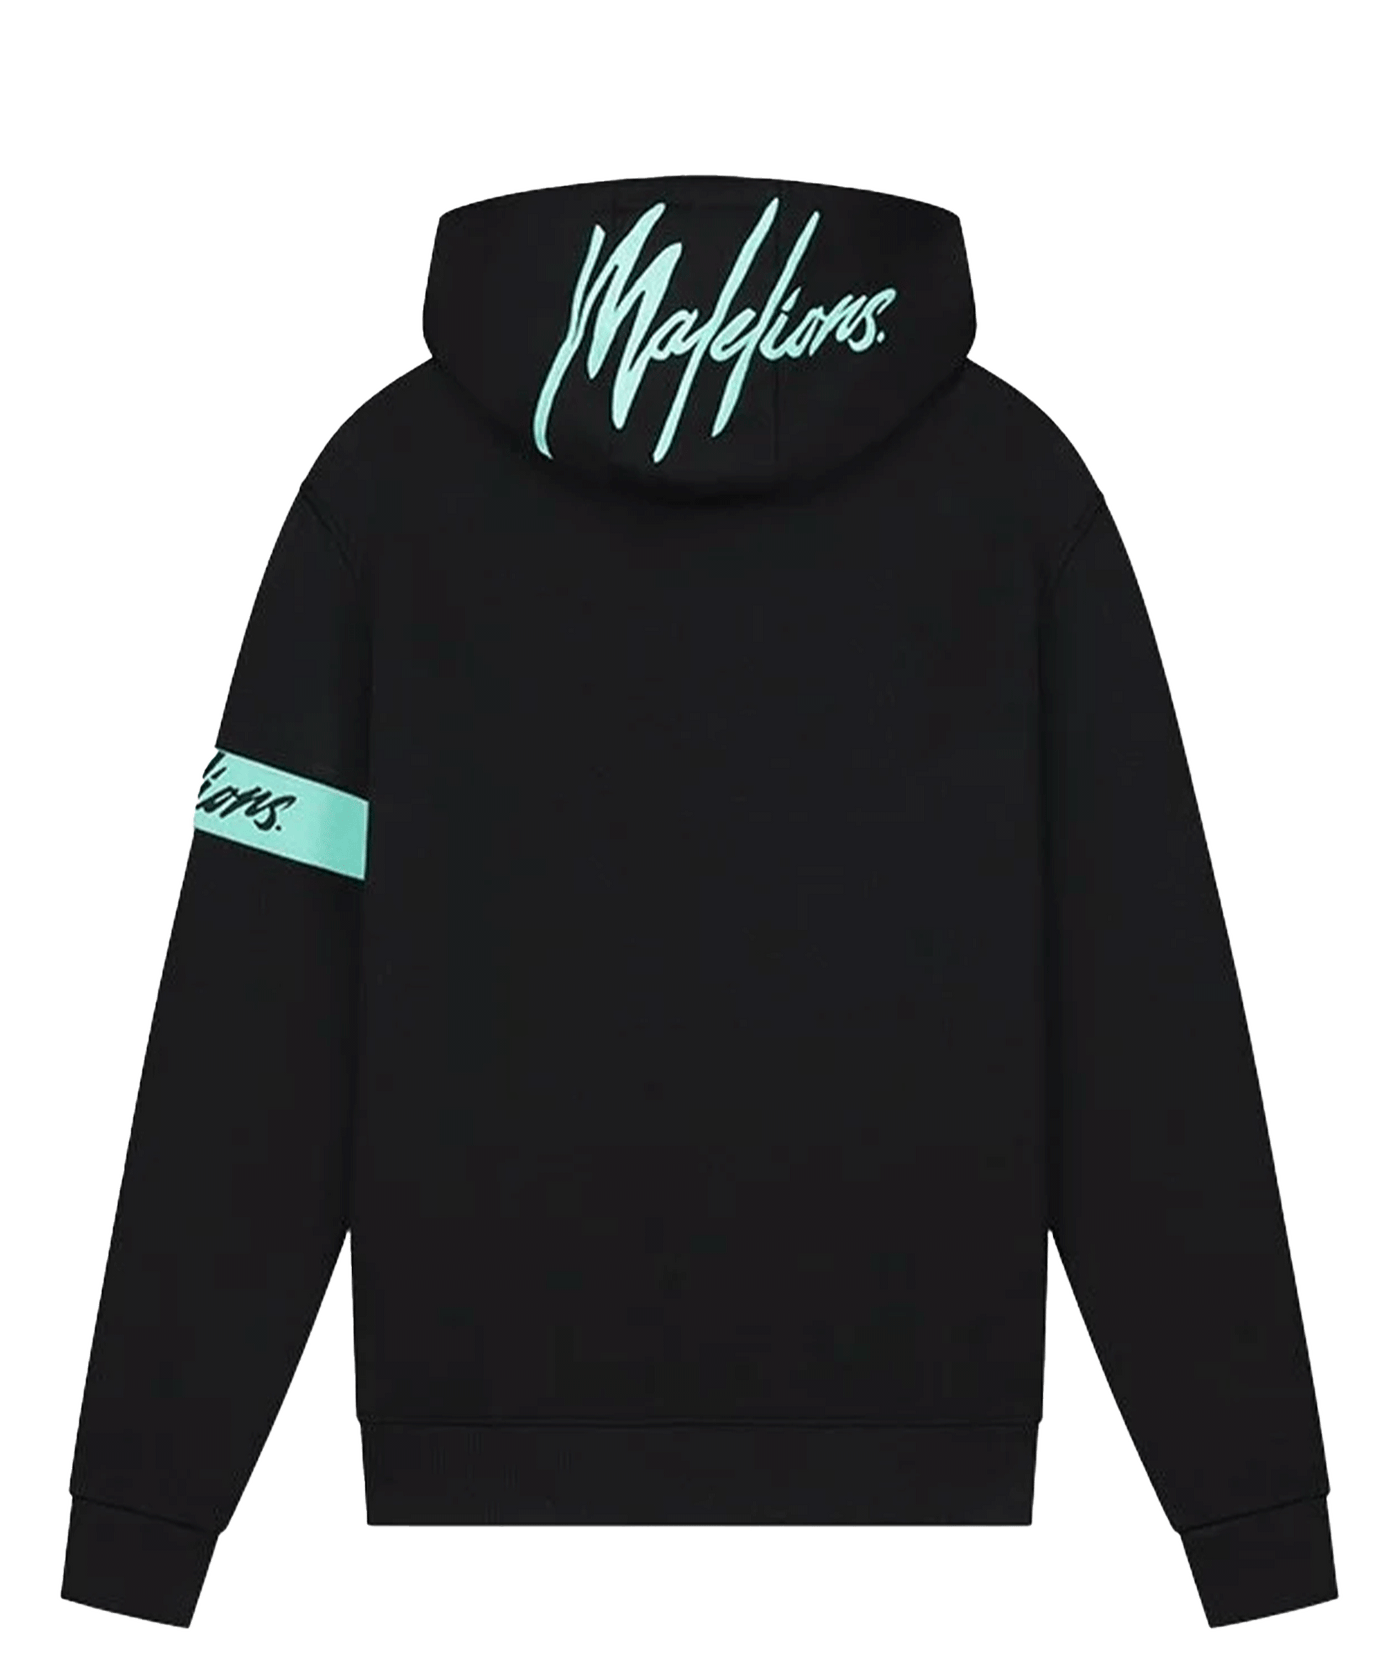 Malelions - Captain - Hoodie 2.0 - Black/turquoise